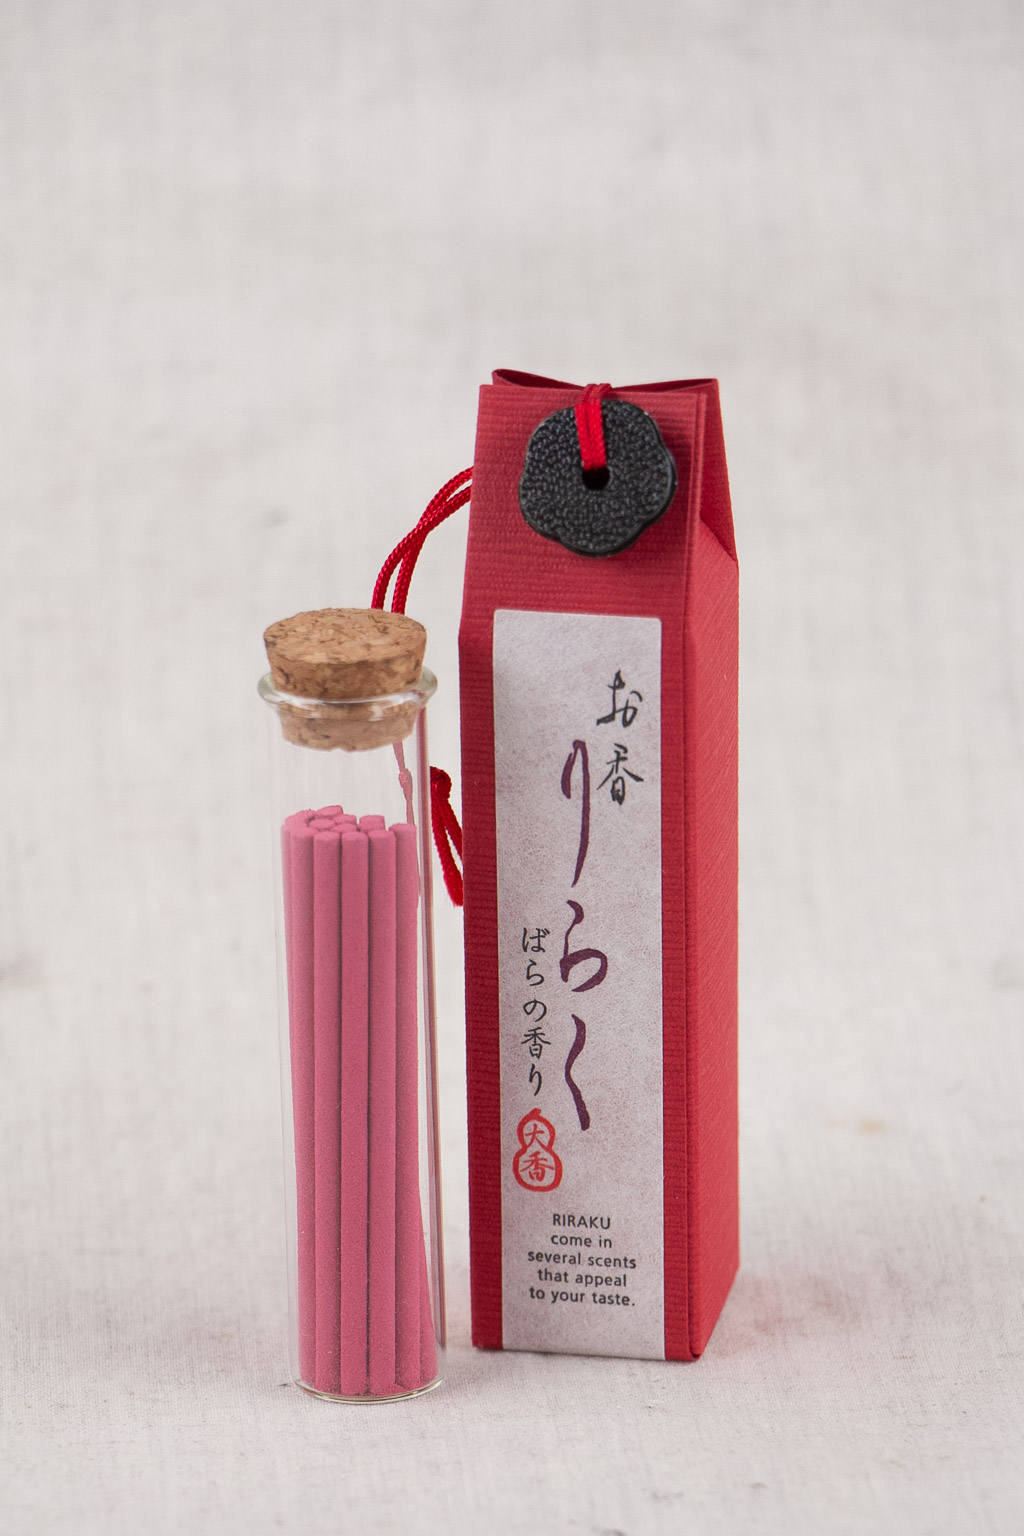 Riraku Fragrance Incense with Stand